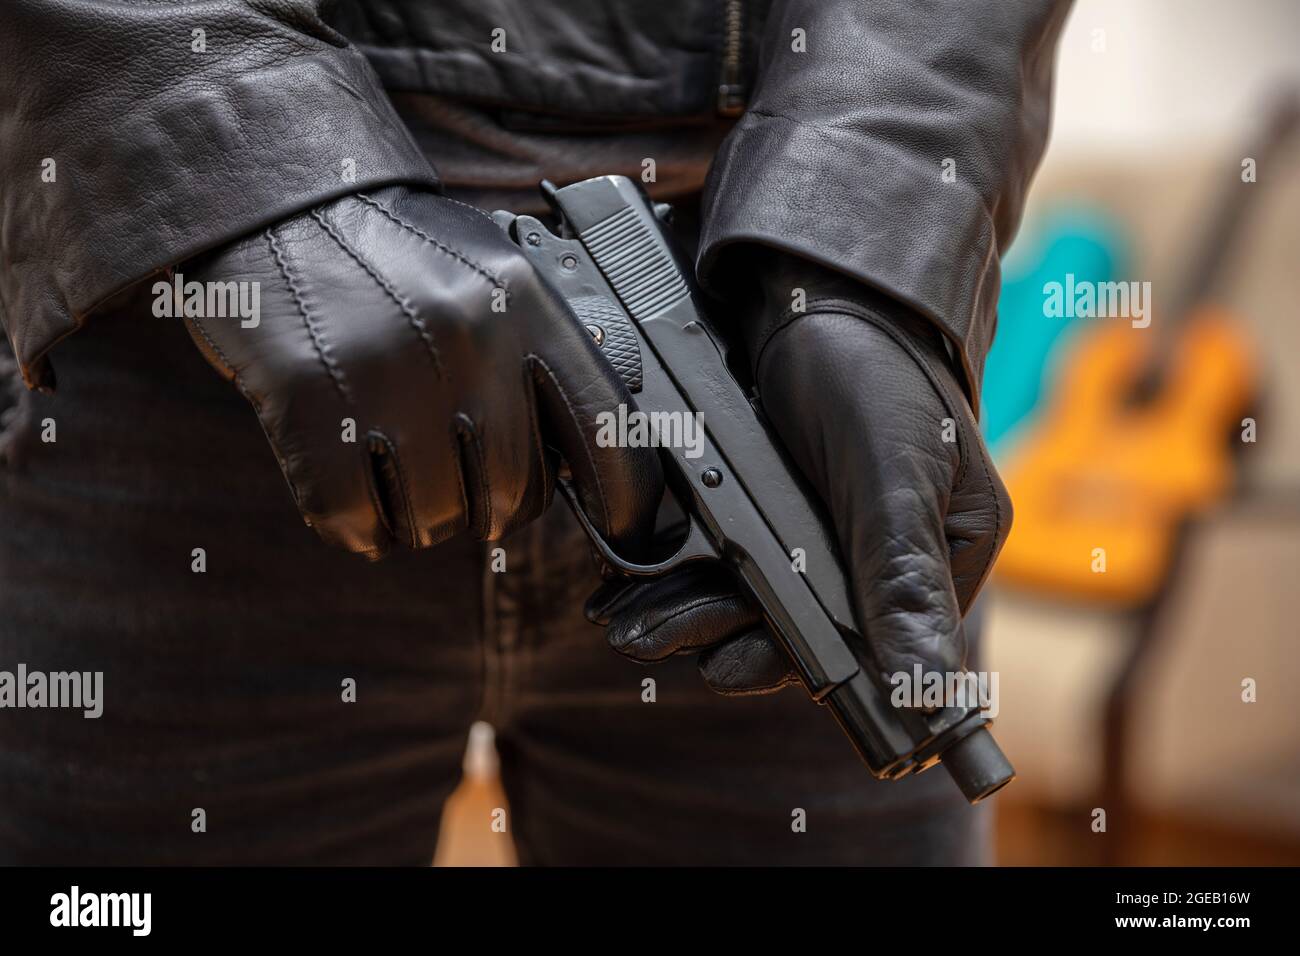 Gloved man arming his pistol. Killer wearing leather jacket holding a gun preparing to shoot, closeup view. Armed gunman, murderer concept Stock Photo